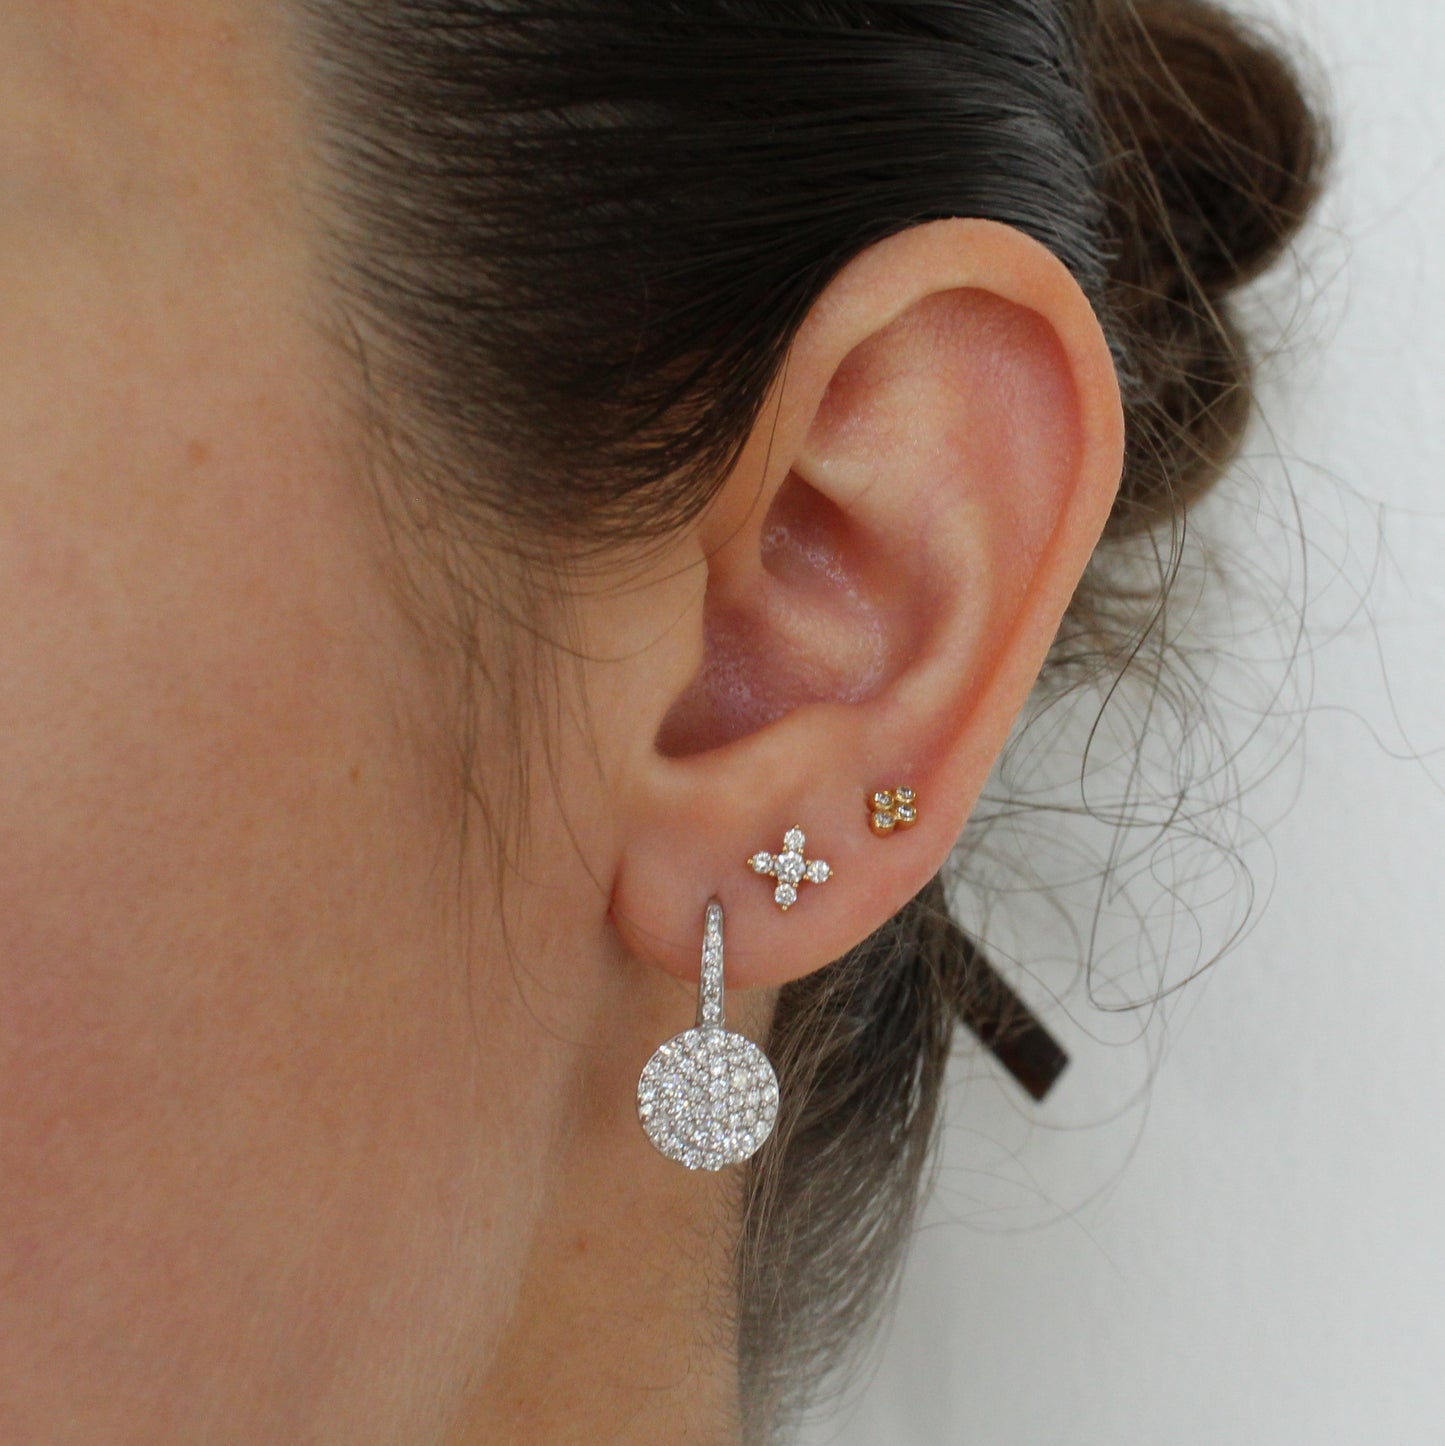 Diamond Disc Dangle Earrings